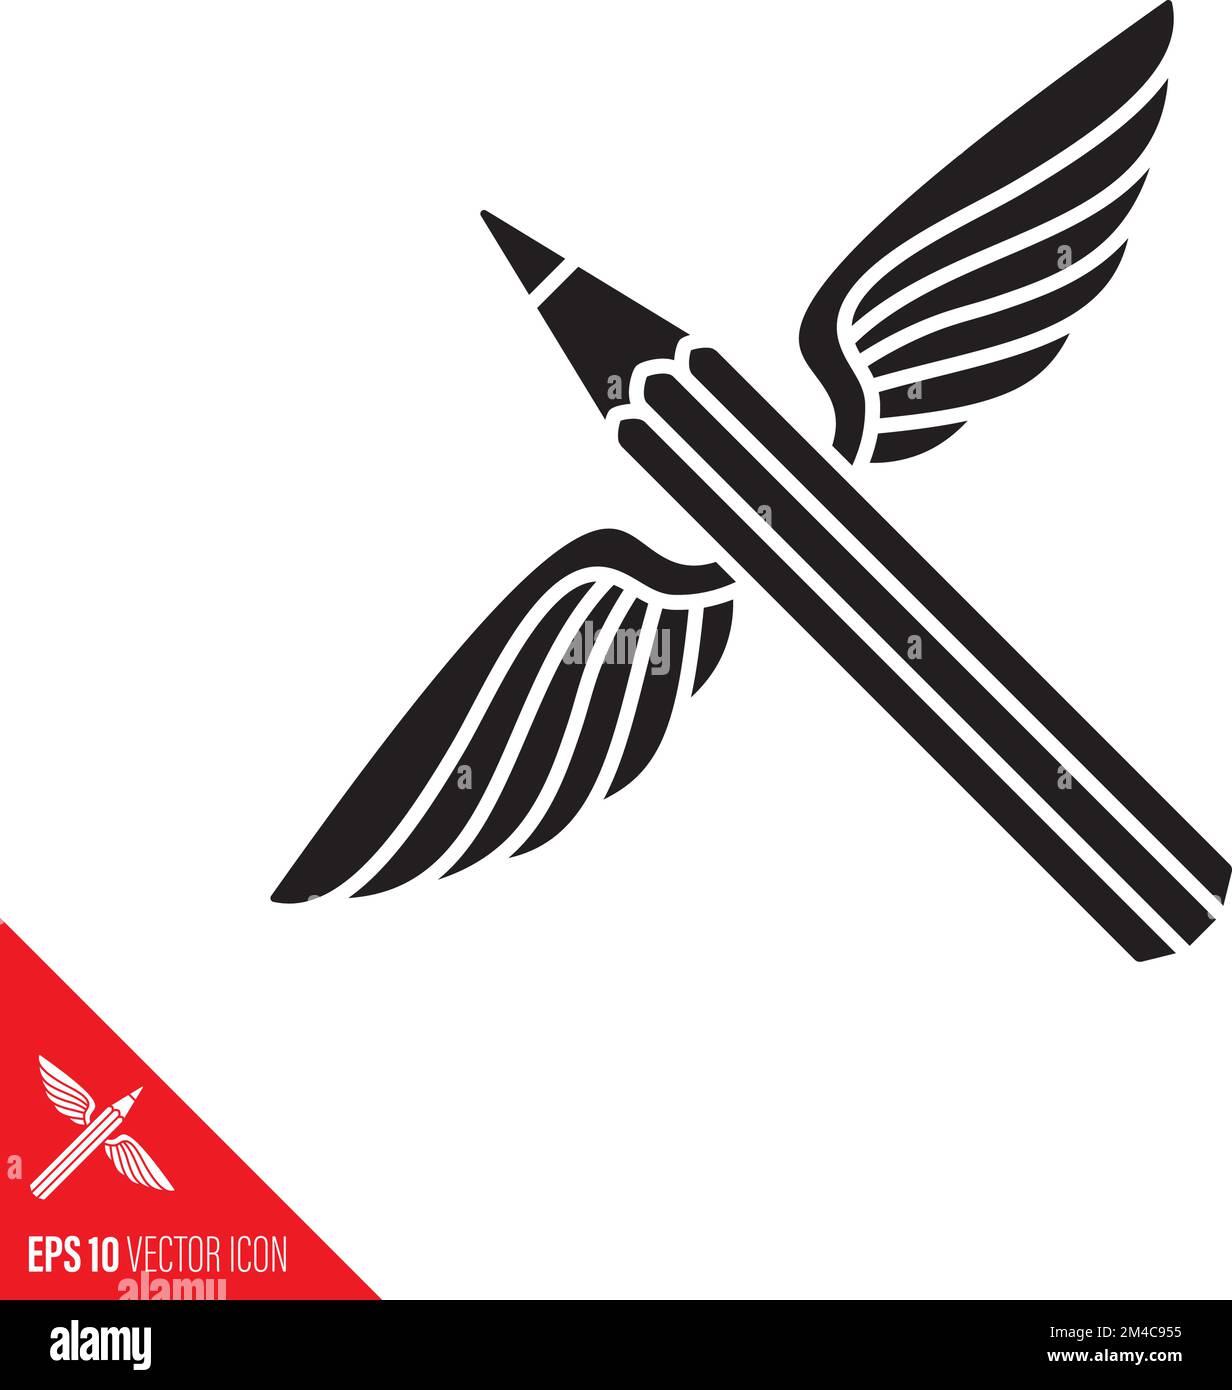 Pencil with wings vector icon. Poetry, imagination and creativity conceptual glyph. symbol Stock Vector